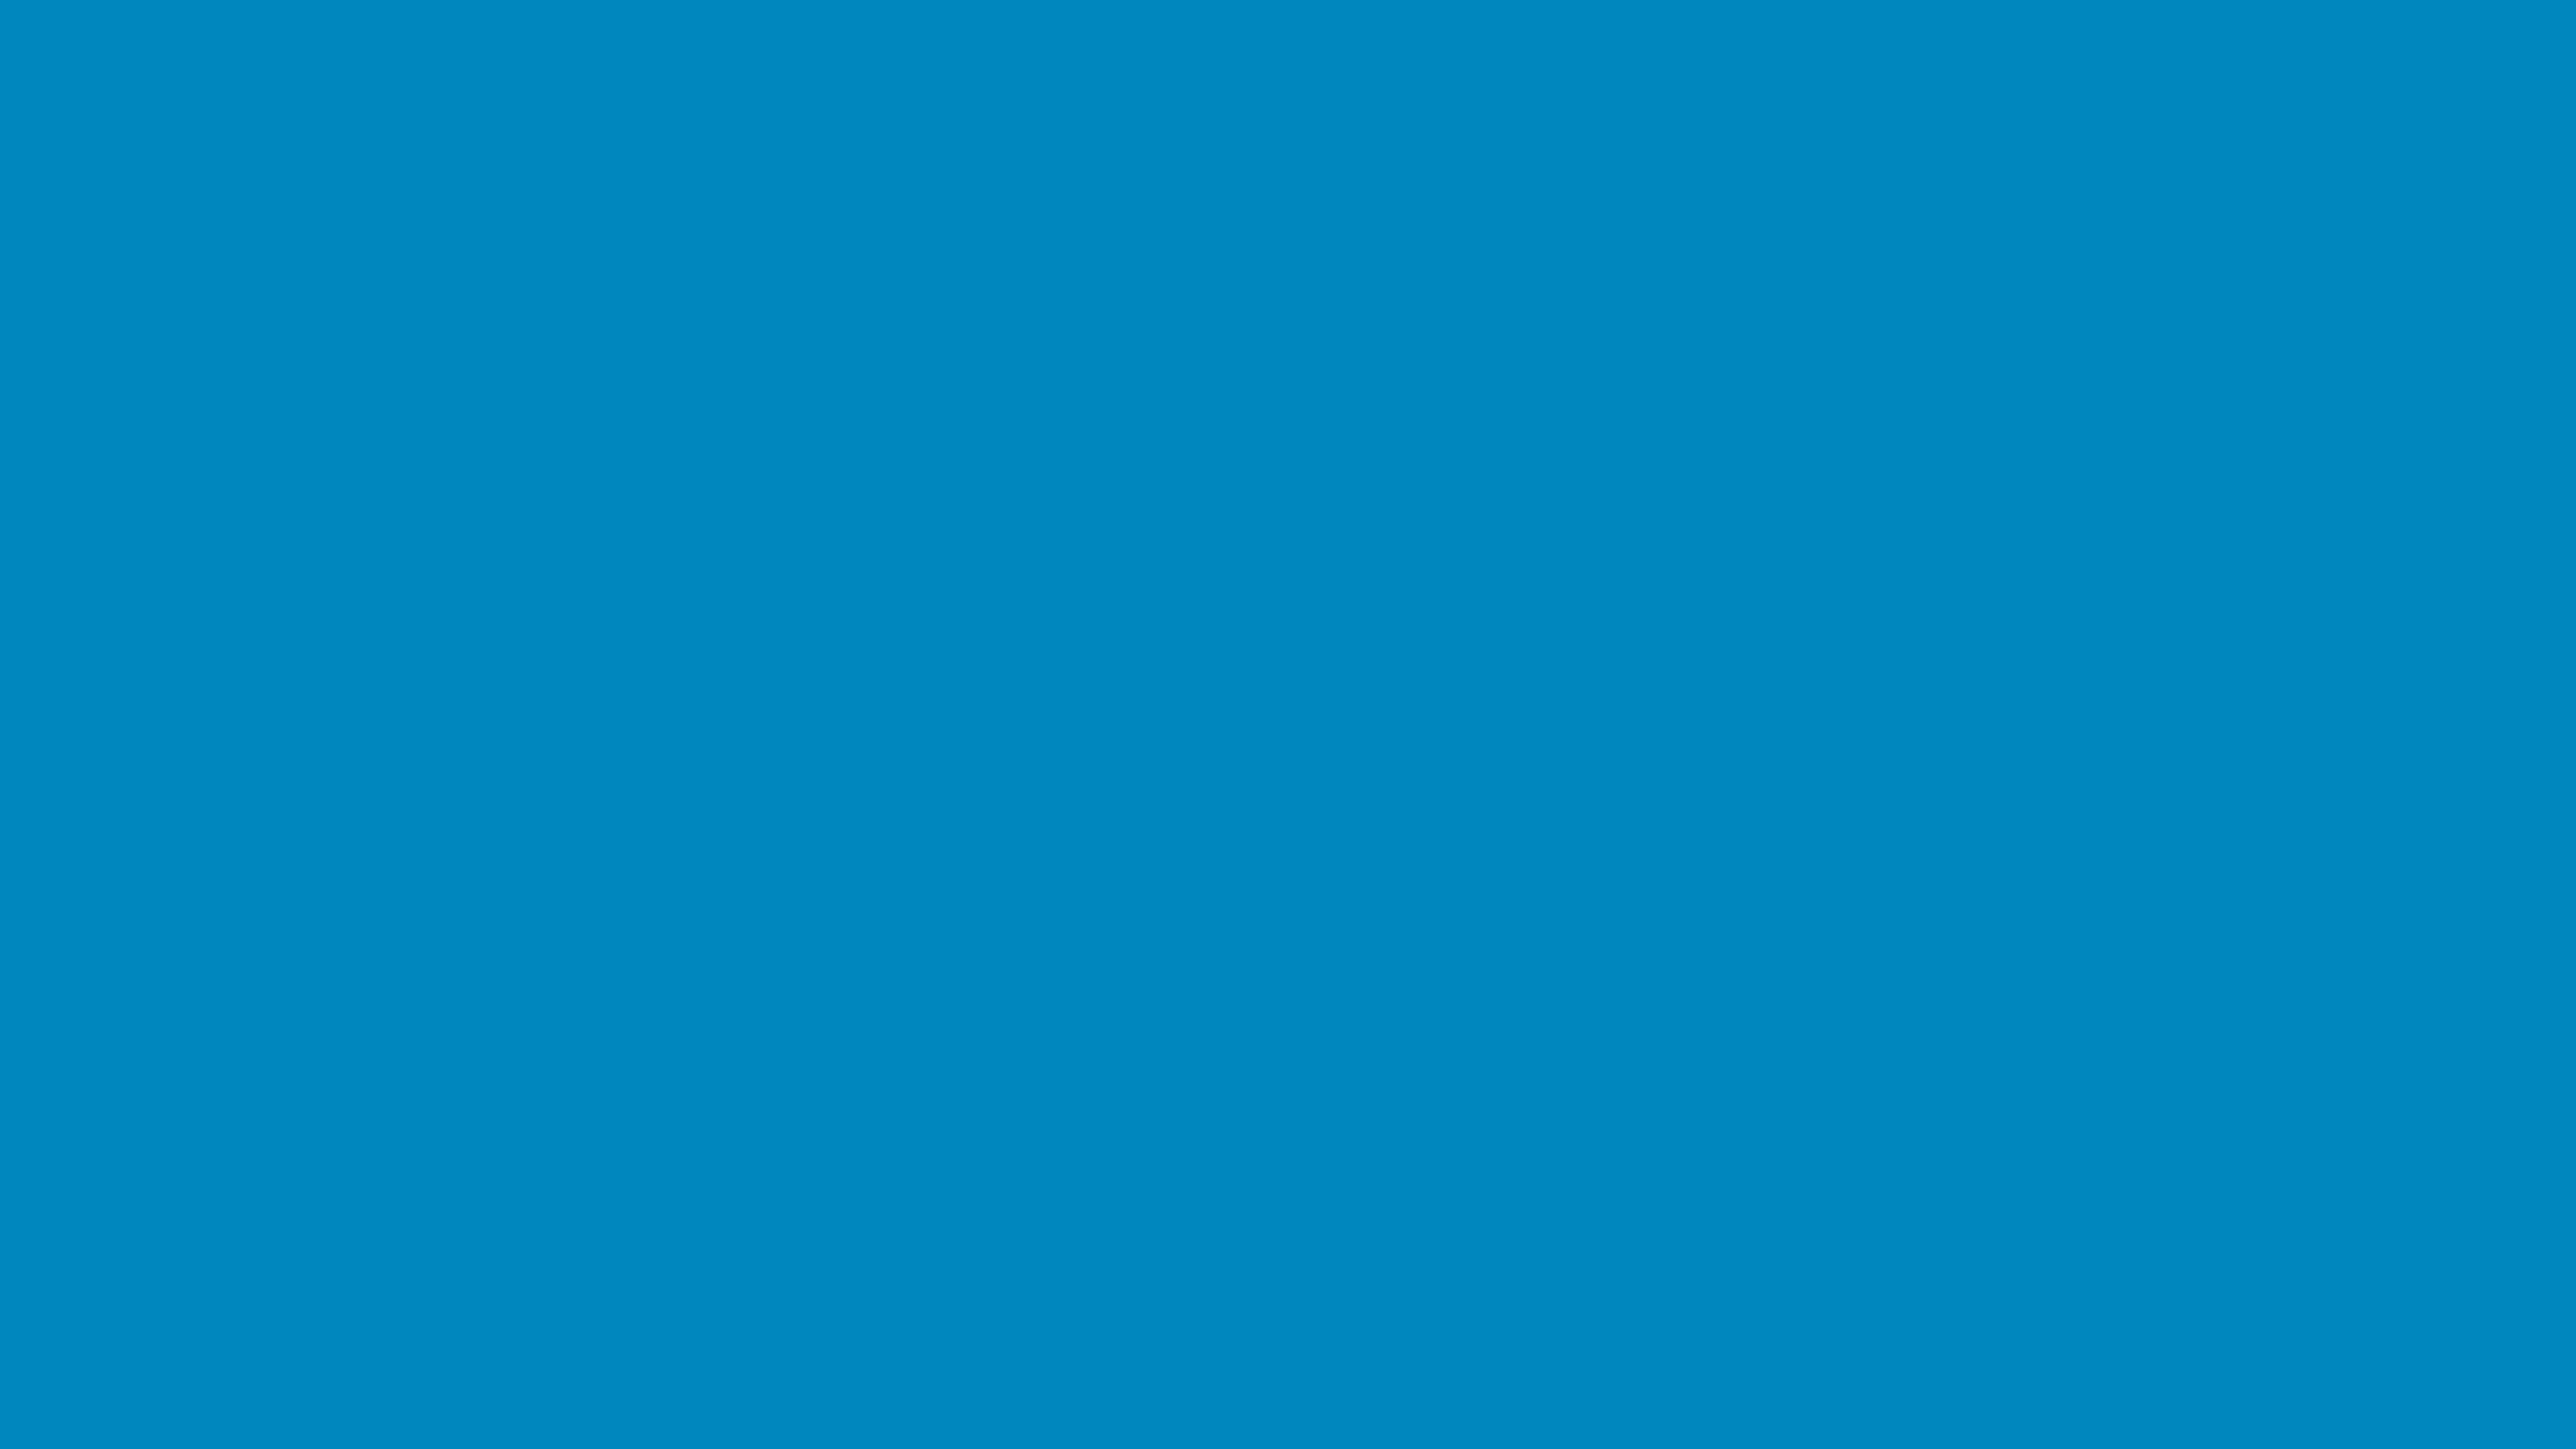 4096x2304 Blue NCS Solid Color Background